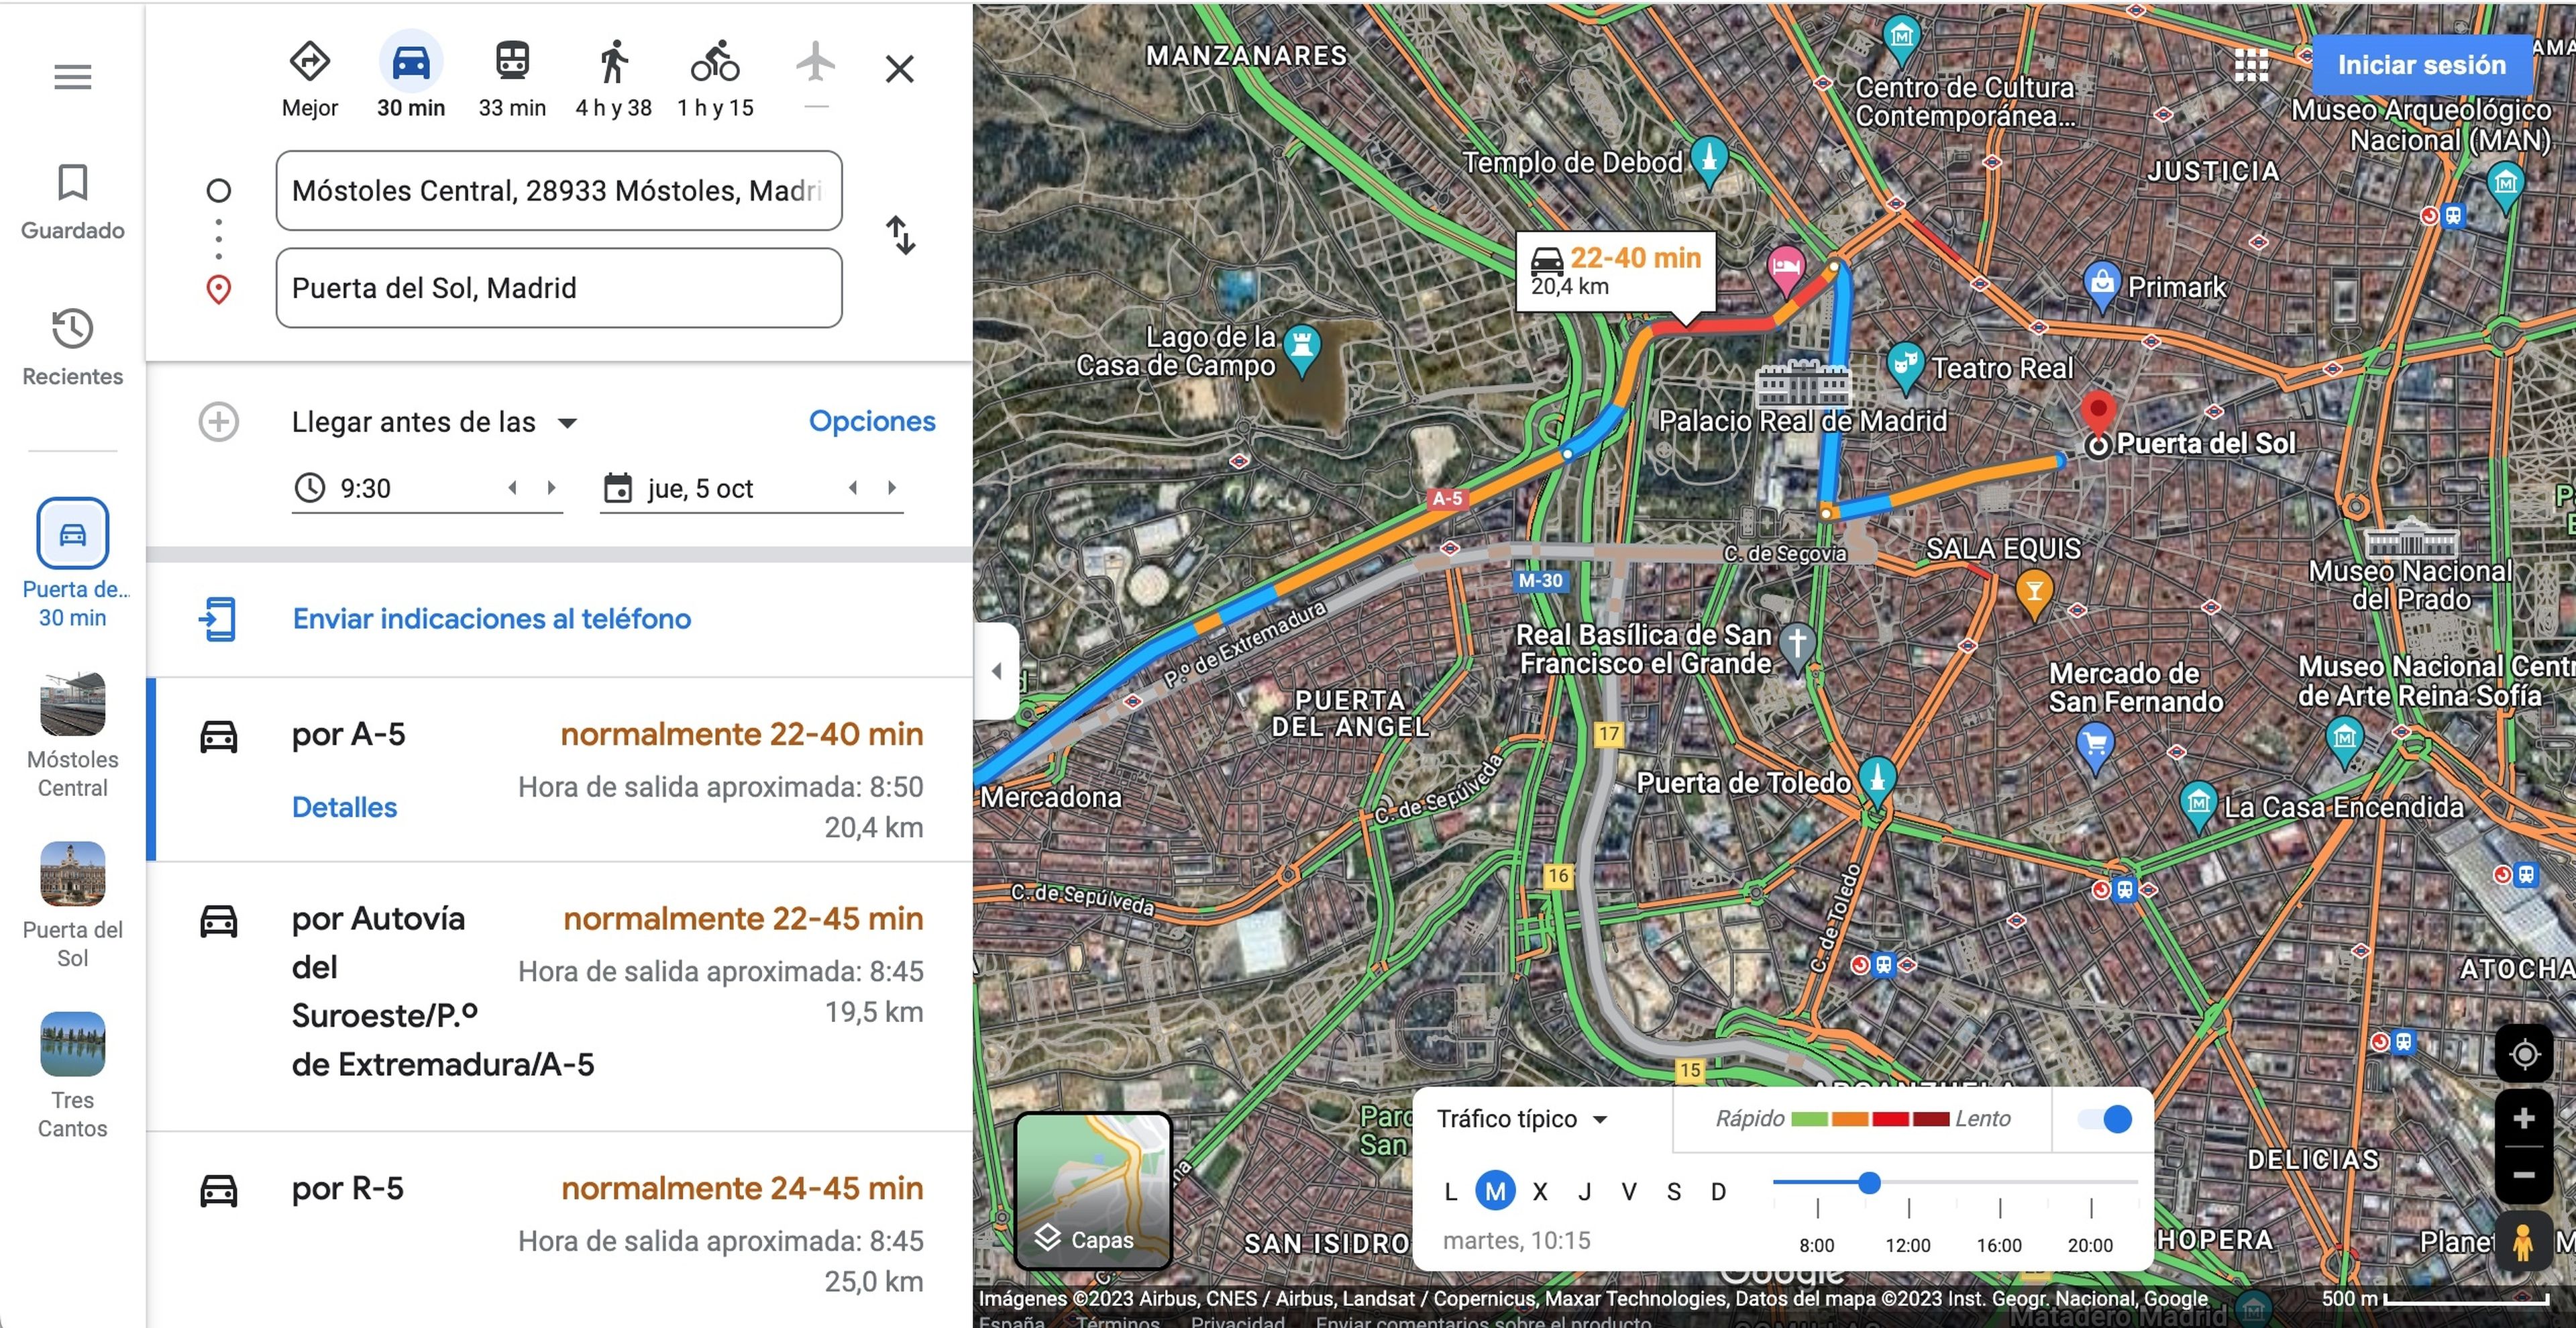 Google maps function visualize future traffic